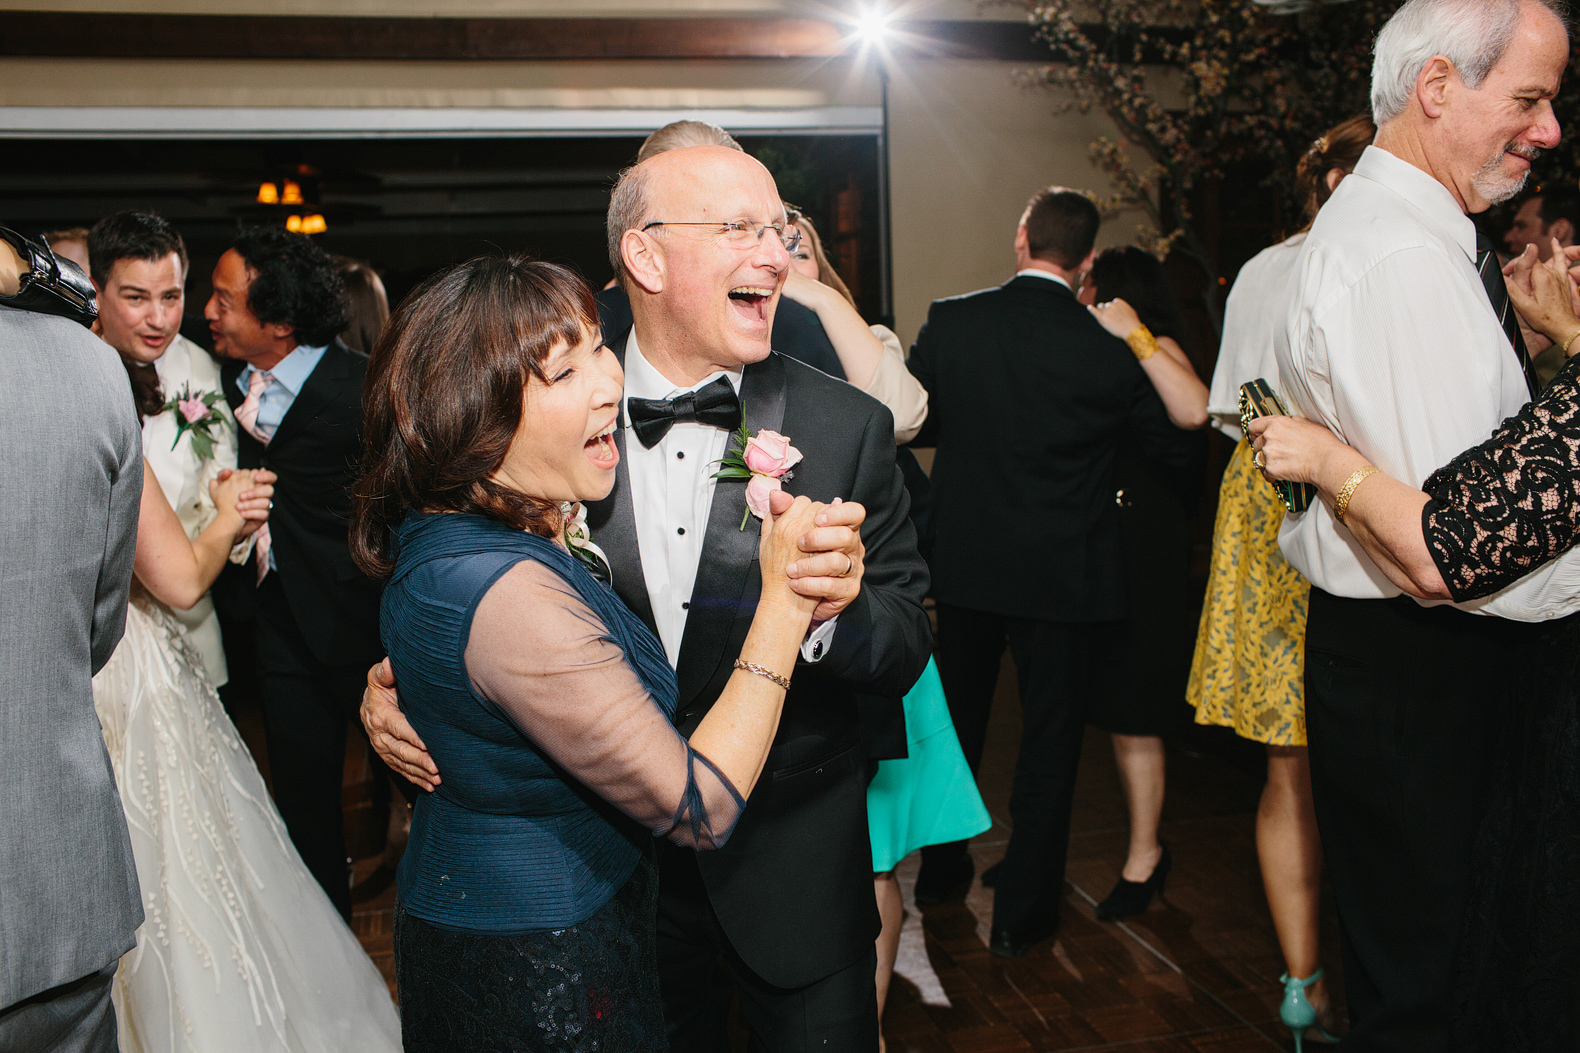 The bride's parents dancing. 